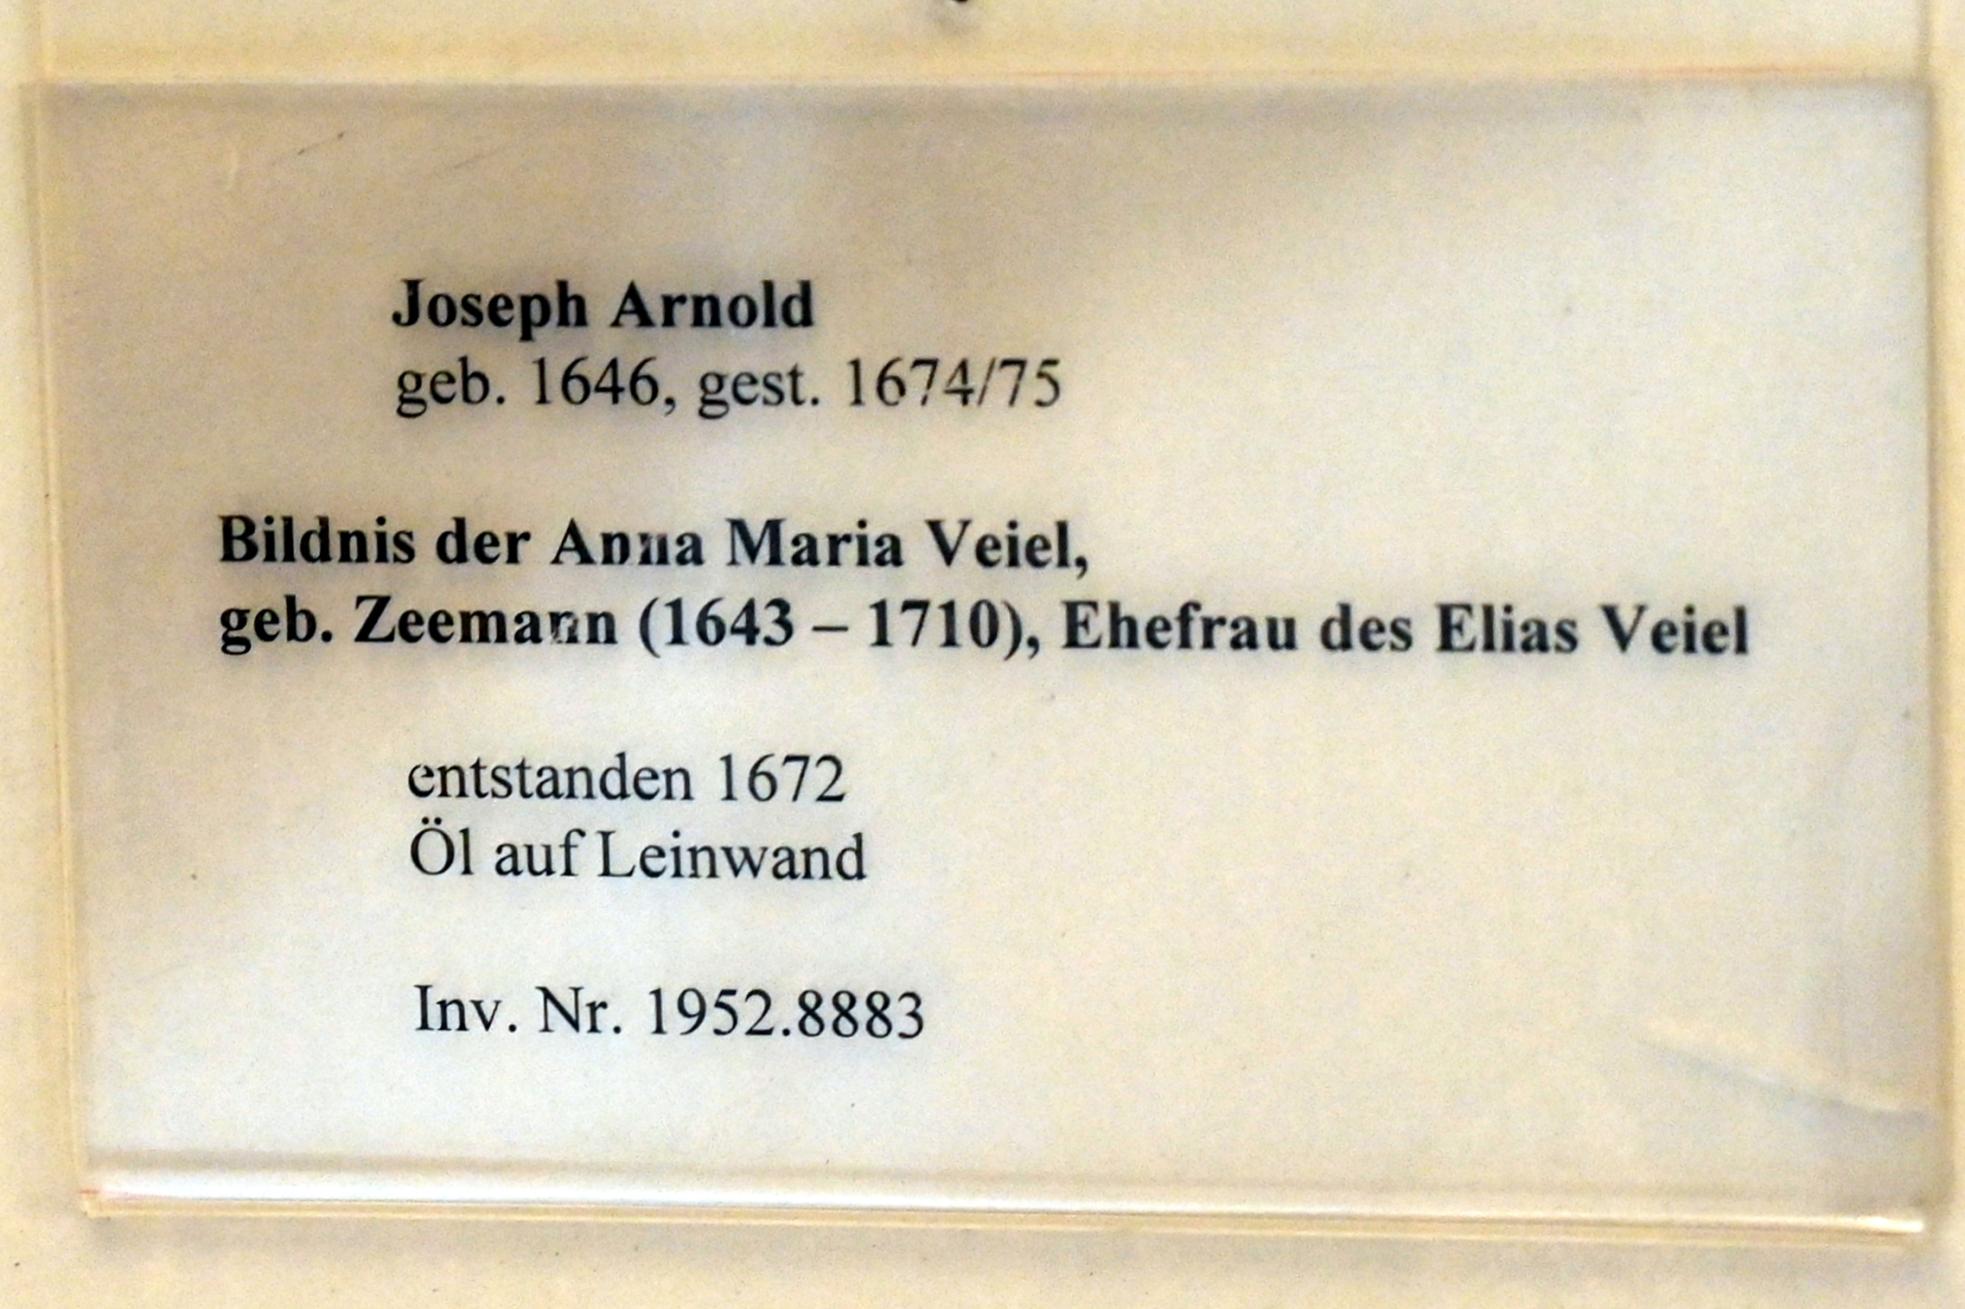 Joseph Arnold (1672), Bildnis der Anna Maria Veiel, geb. Zeemann (1643-1710), Ehefrau des Elias Veiel, Ulm, Museum Ulm, Saal 12i, 1672, Bild 2/2